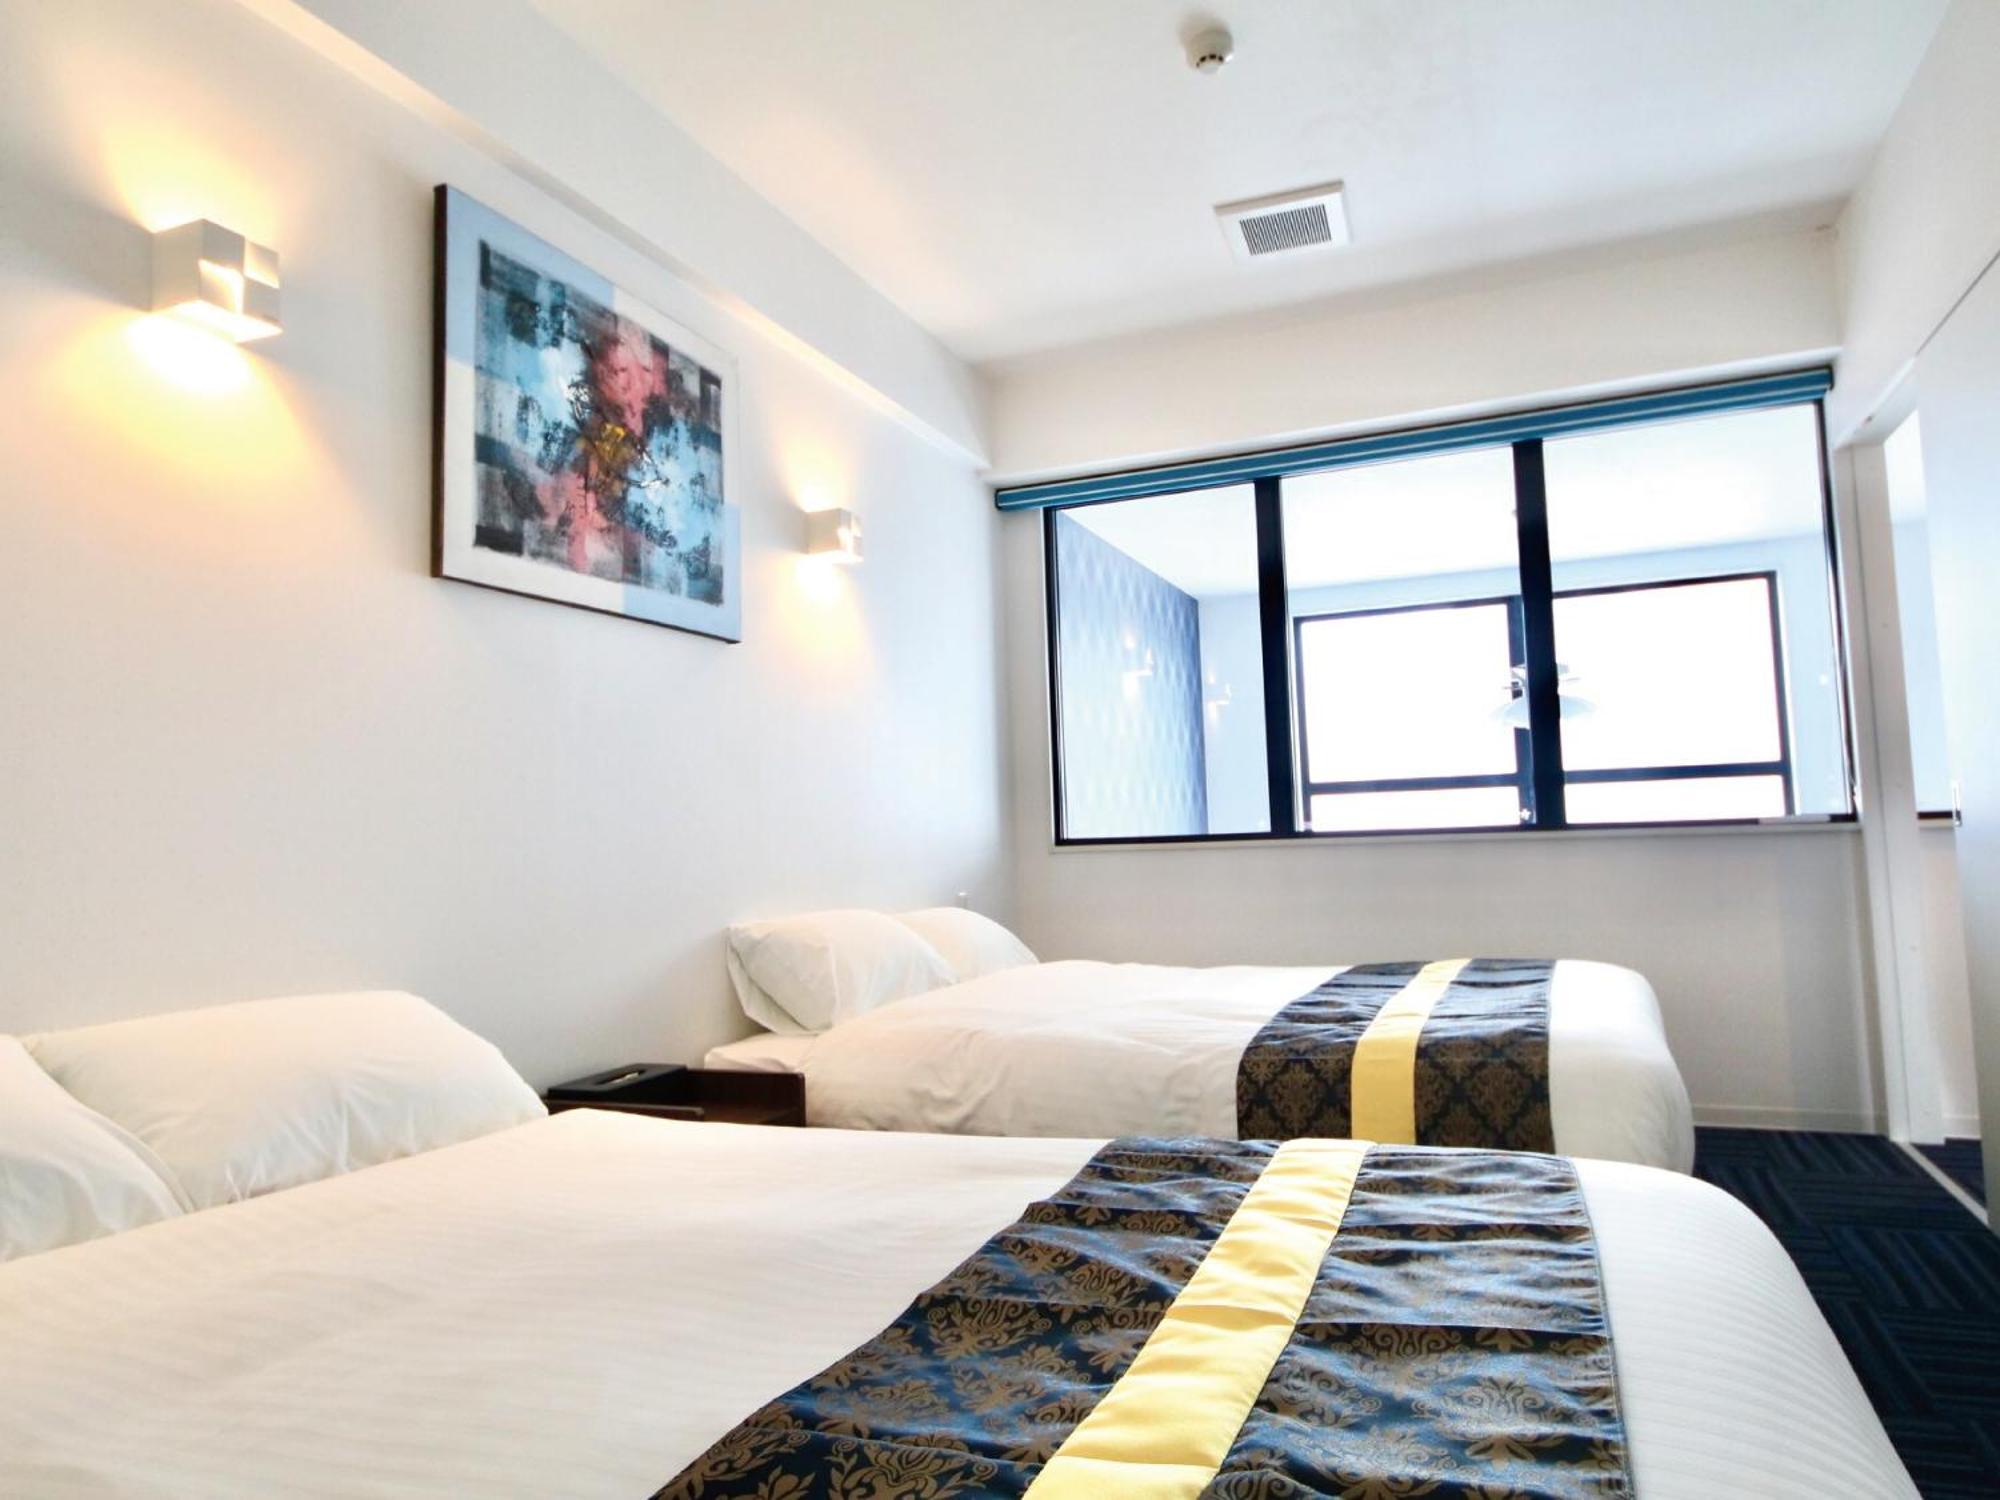 Hotel Chula Vista Senaga -Seven Hotels And Resorts- Naha Dış mekan fotoğraf